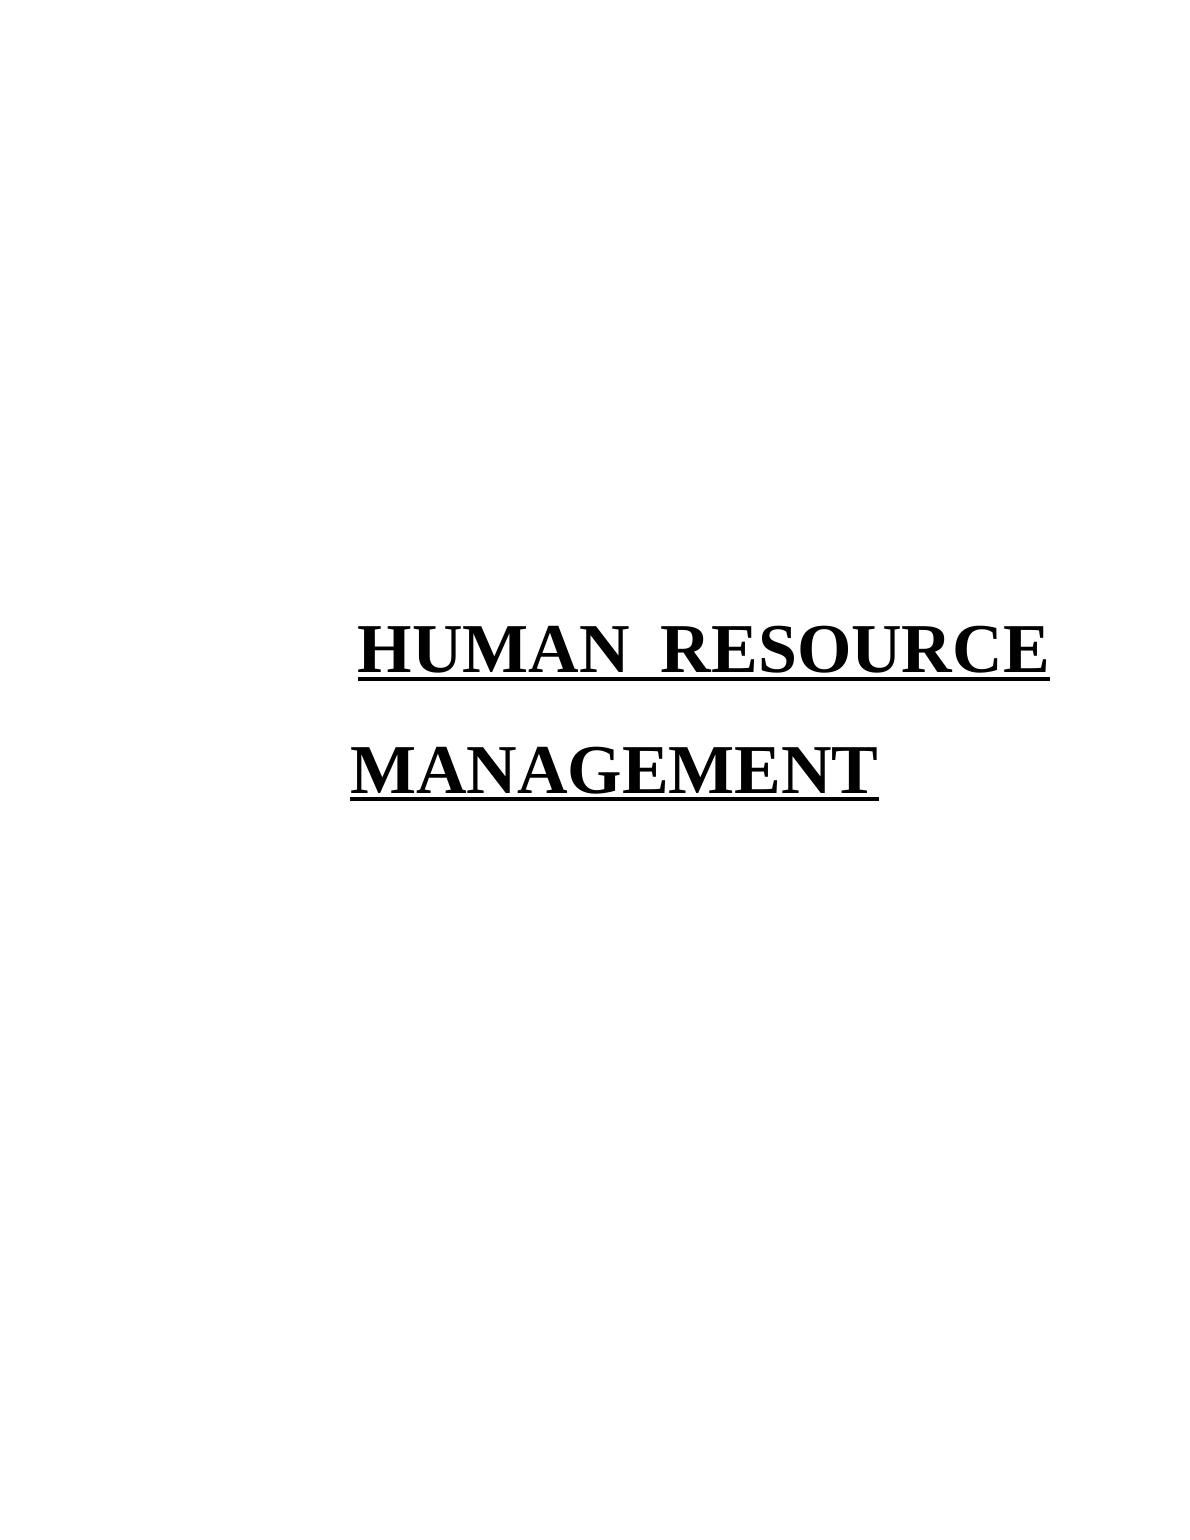 Human Resource Management Assignment - Lloyd Bank_1